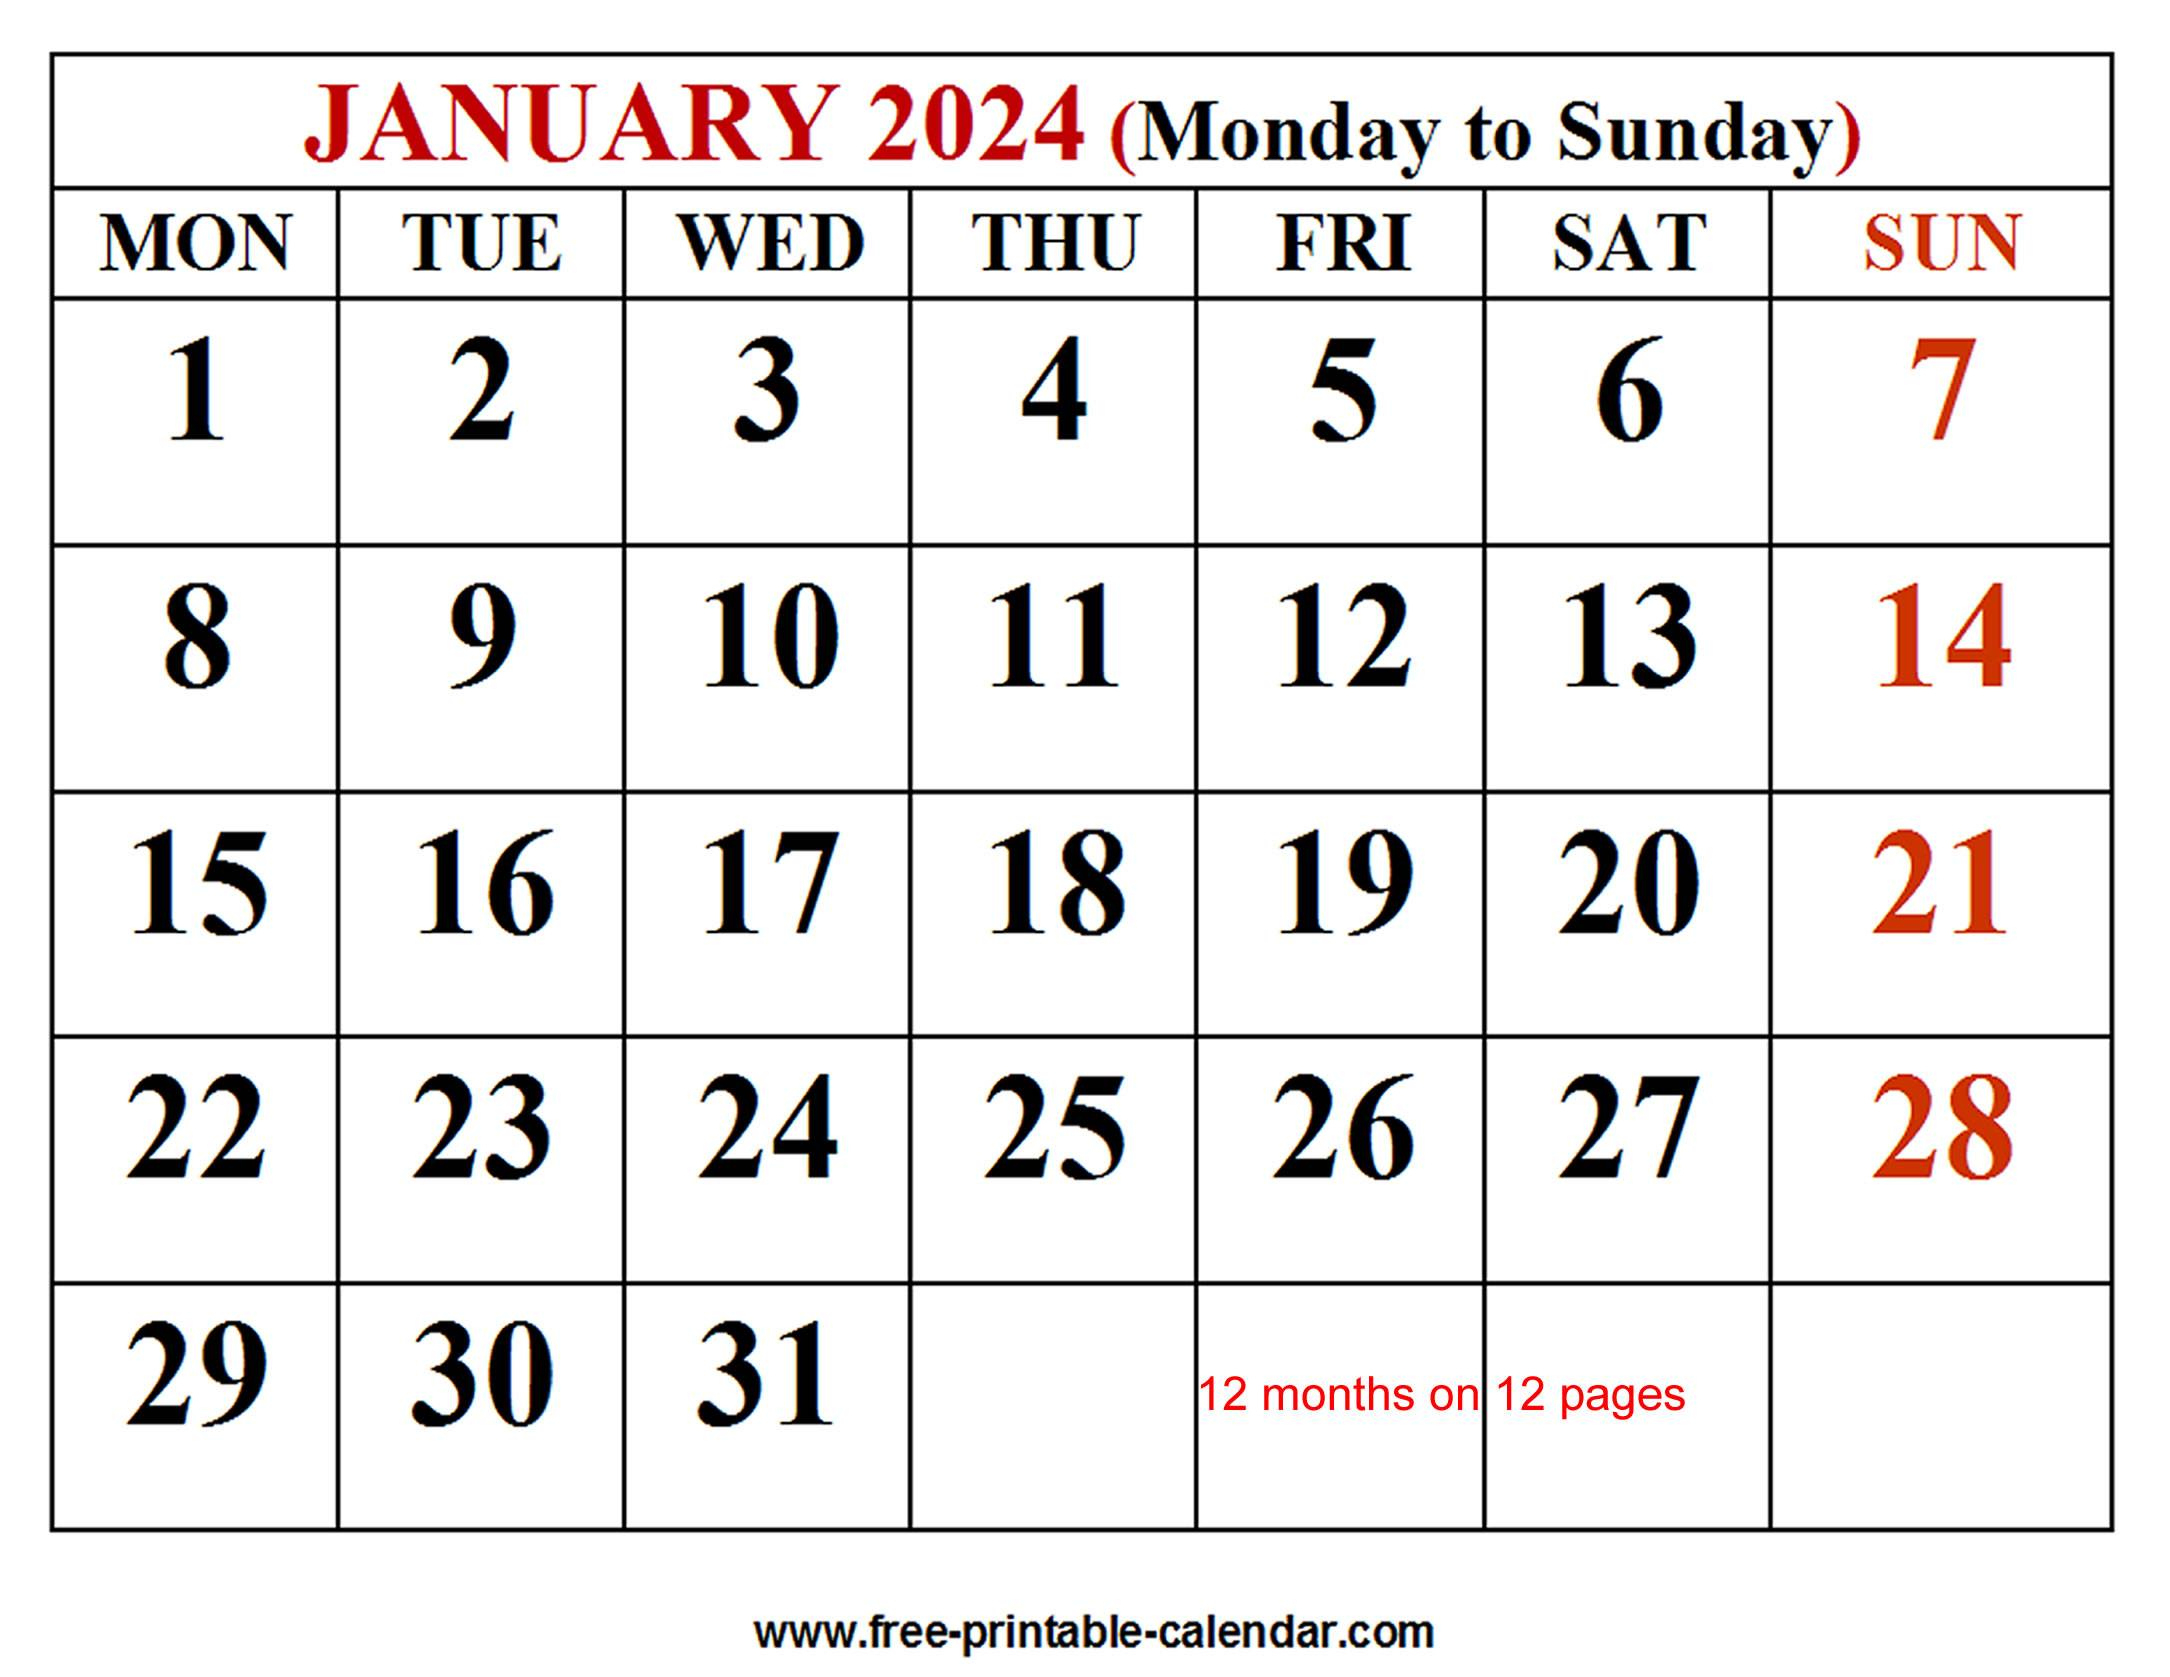 2024 Calendar Template - Free-Printable-Calendar | Printable Calendar 2024 Free Template